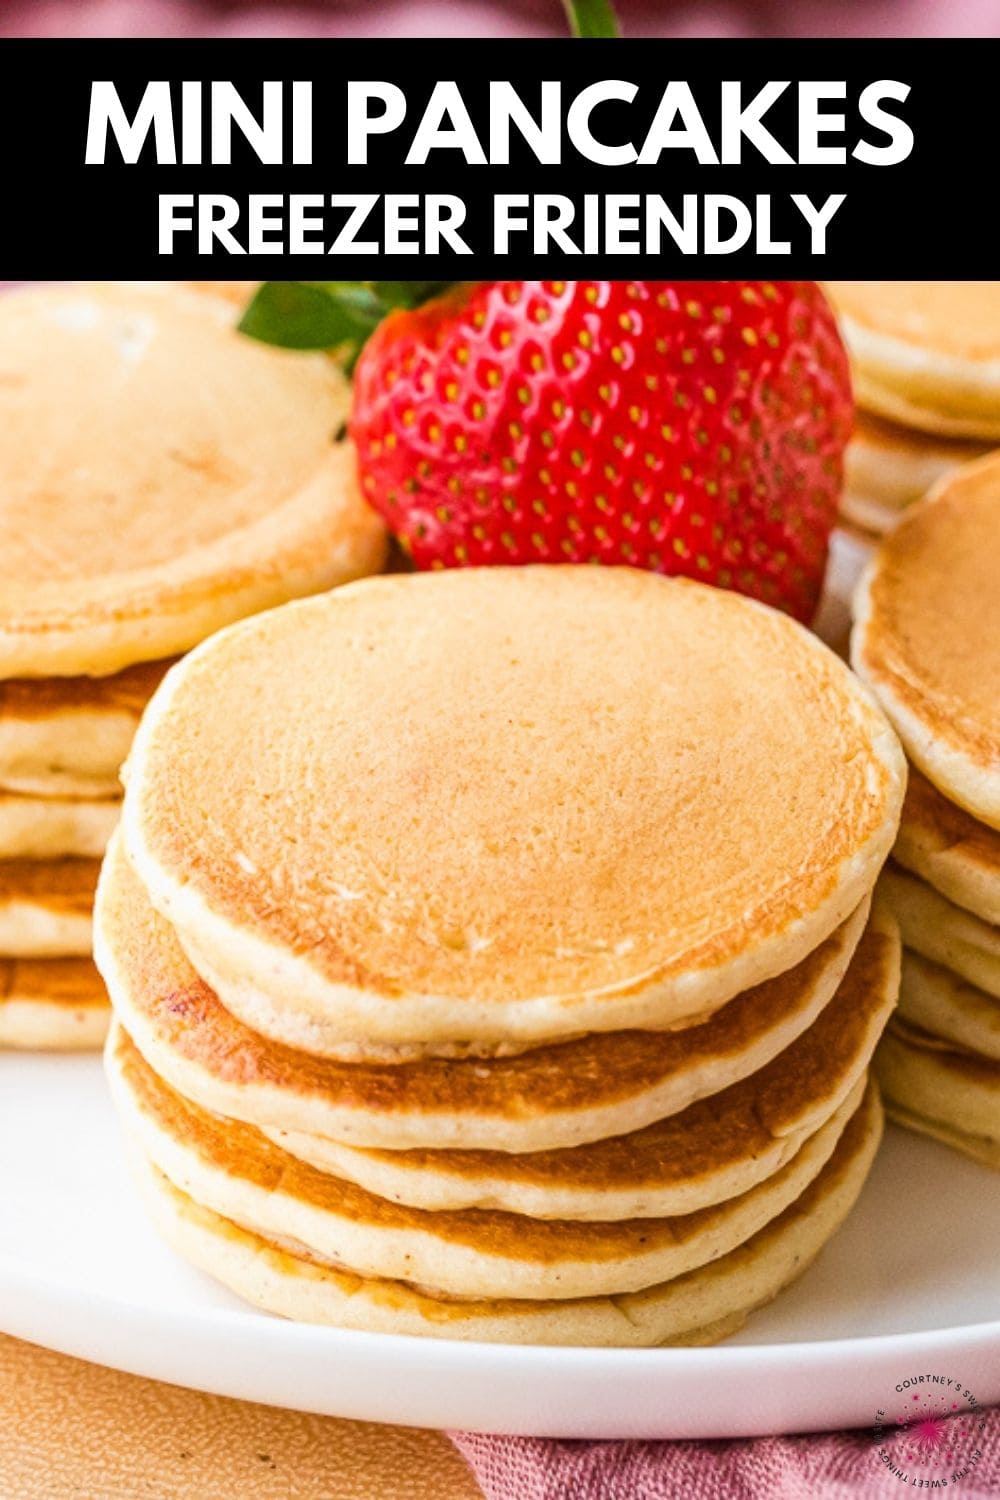 stacked mini pancakes with text on image saying mini pancakes.